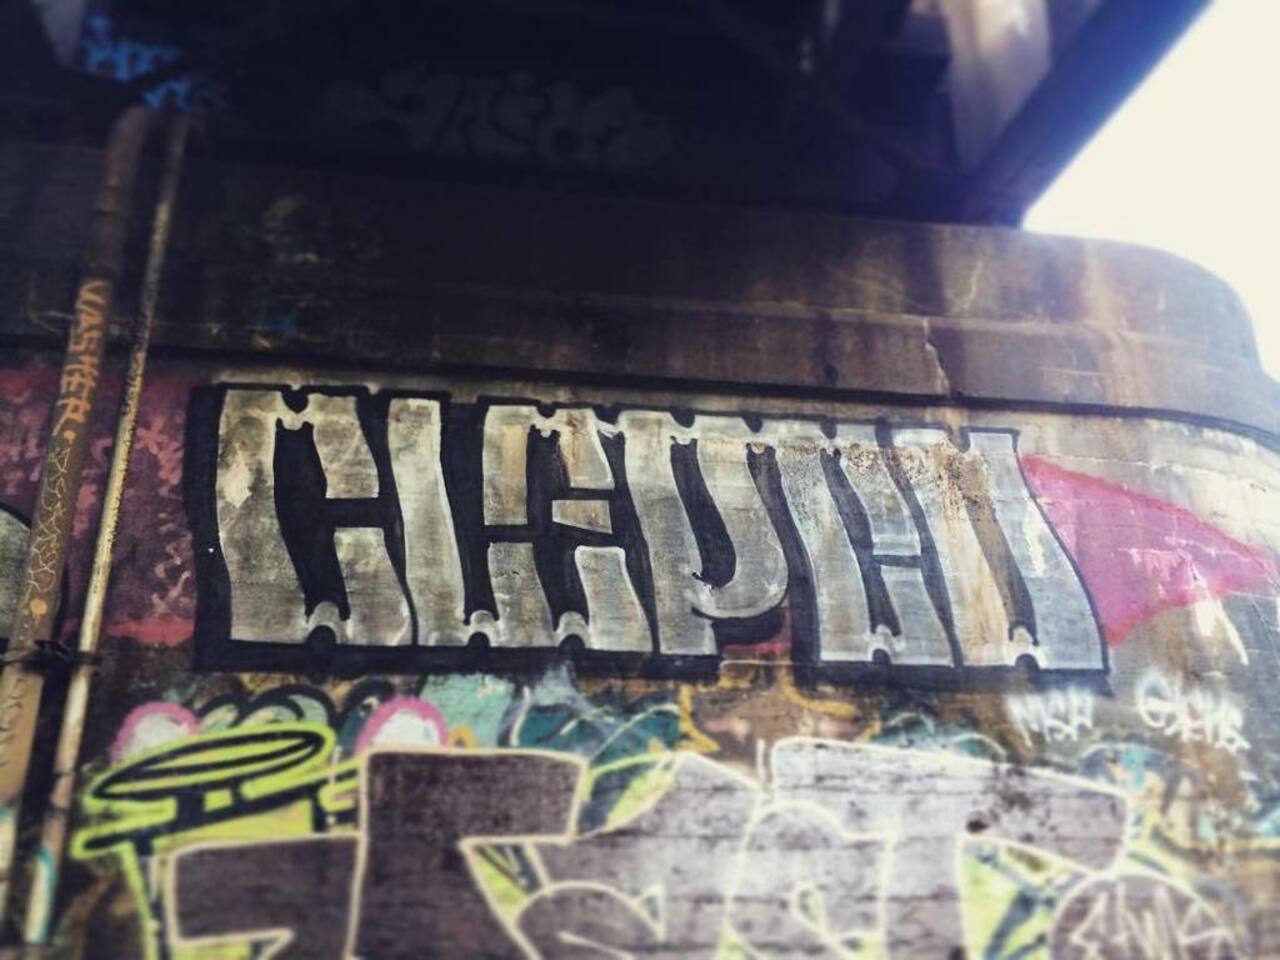 RT @artpushr: via #eyegee206 "http://bit.ly/1WH3iVm" #graffiti #streetart http://t.co/JqZc5HKhVJ